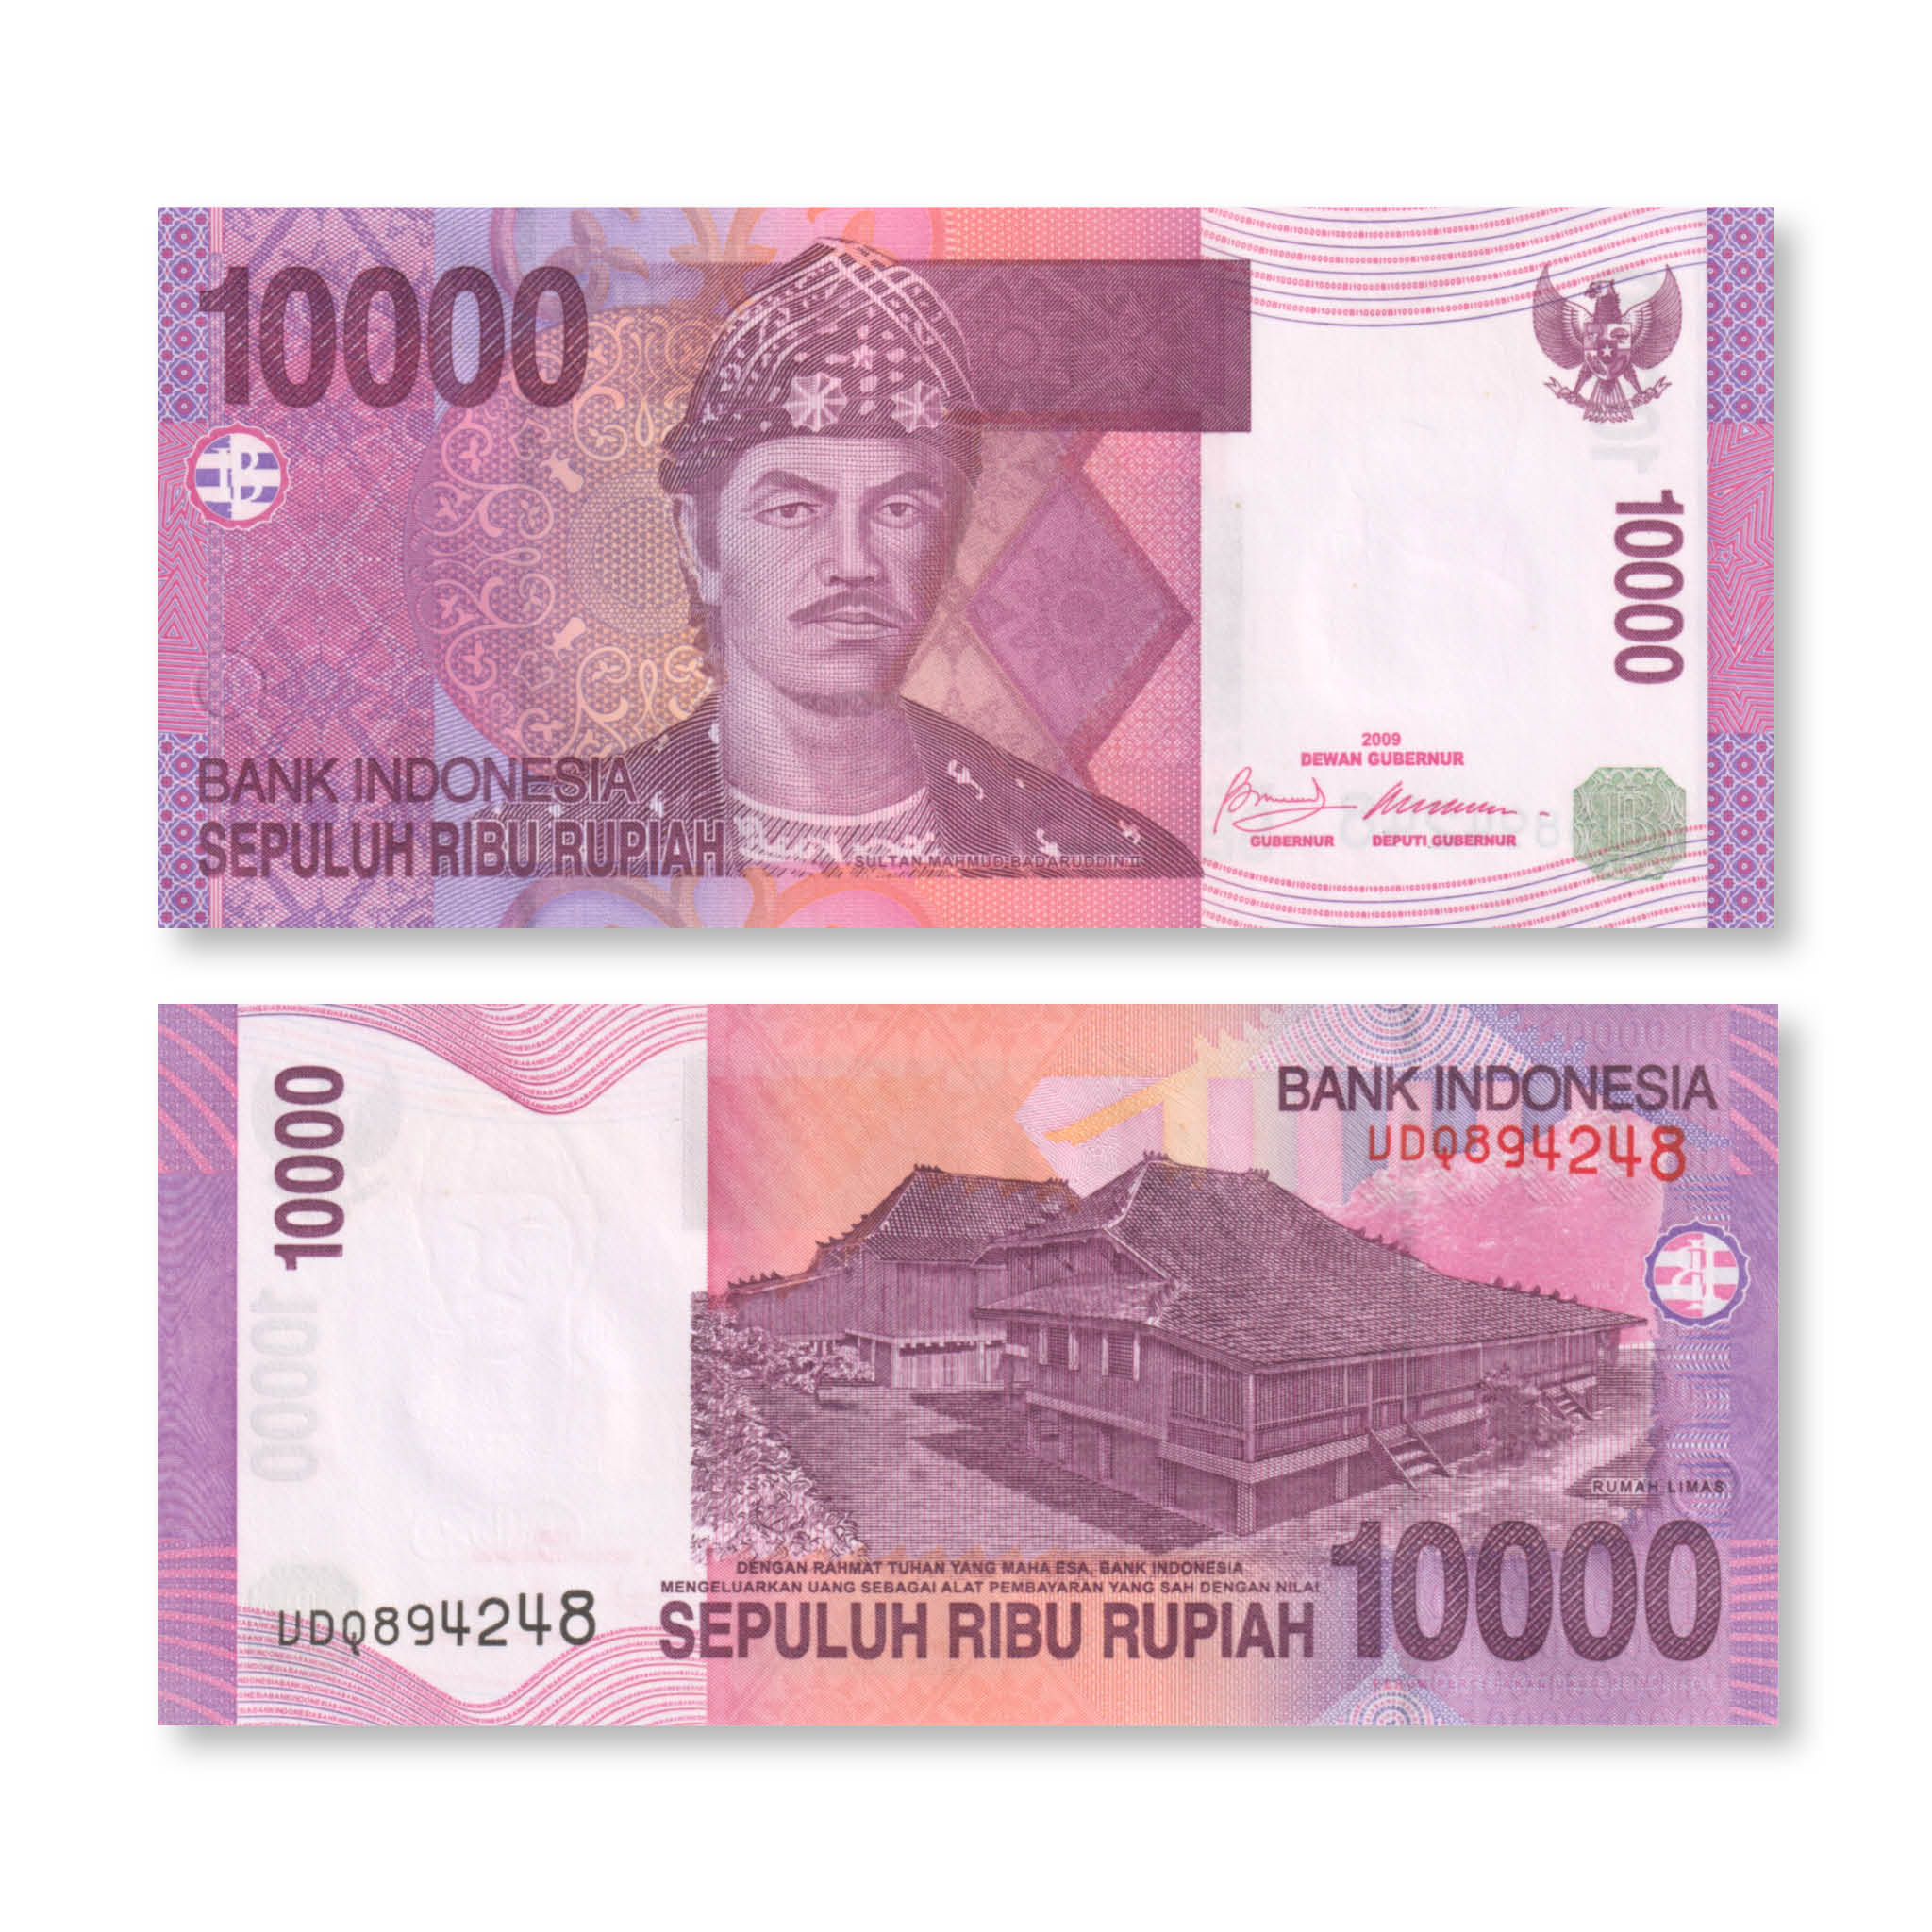 Indonesia 10000 Rupiah, 2009/2005, B600f, P143e, UNC - Robert's World Money - World Banknotes